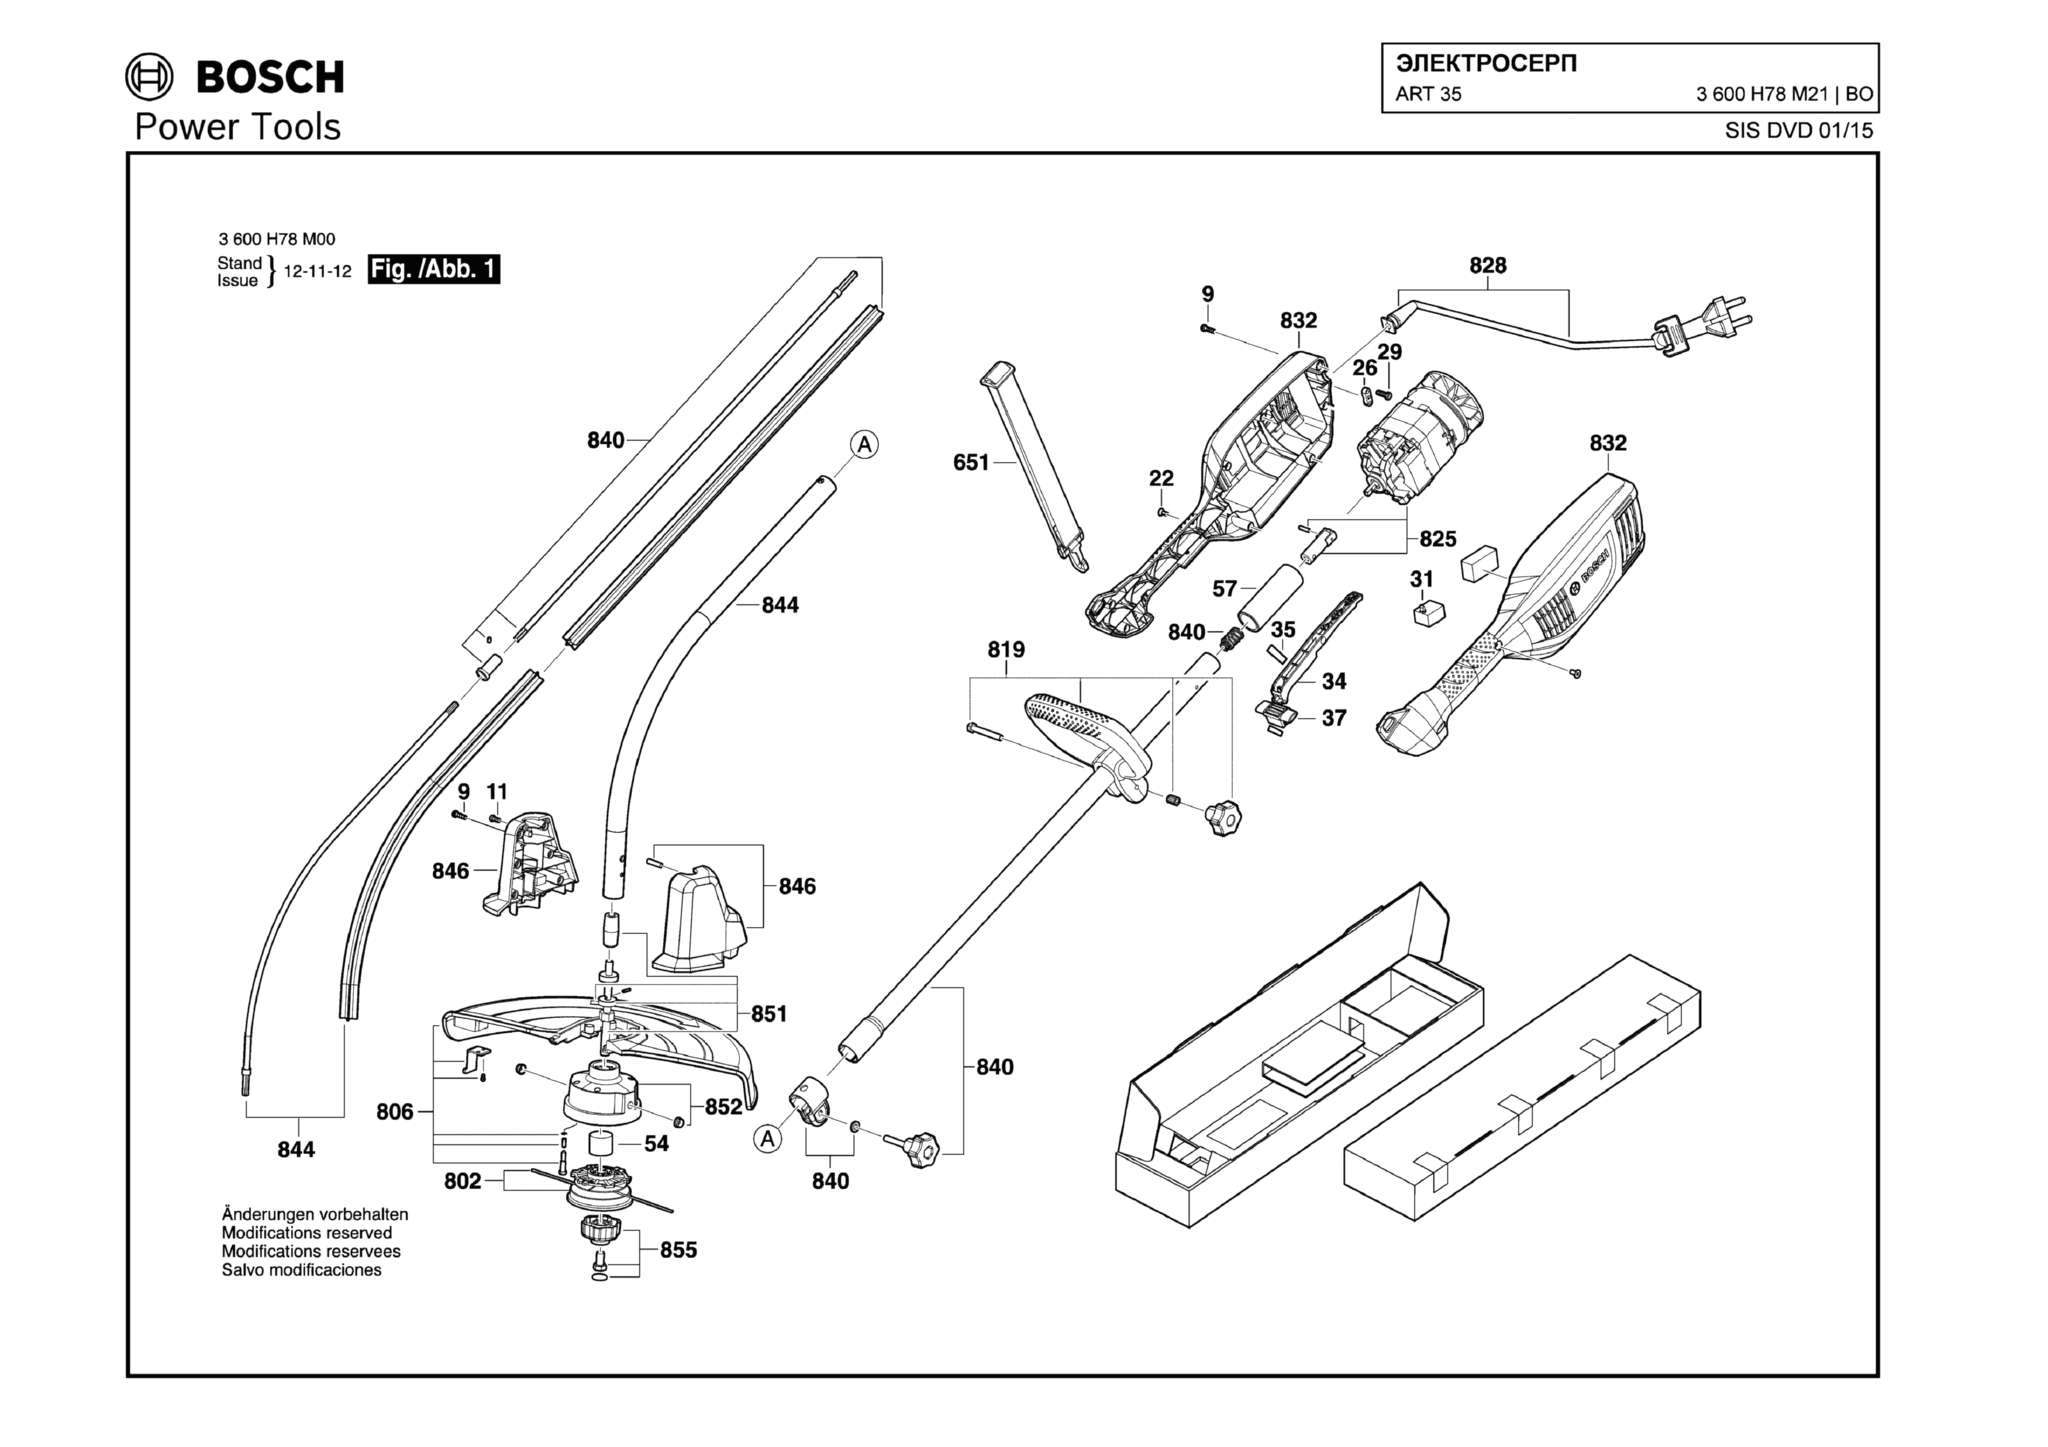 Запчасти, схема и деталировка Bosch ART 35 (ТИП 3600H78M21)